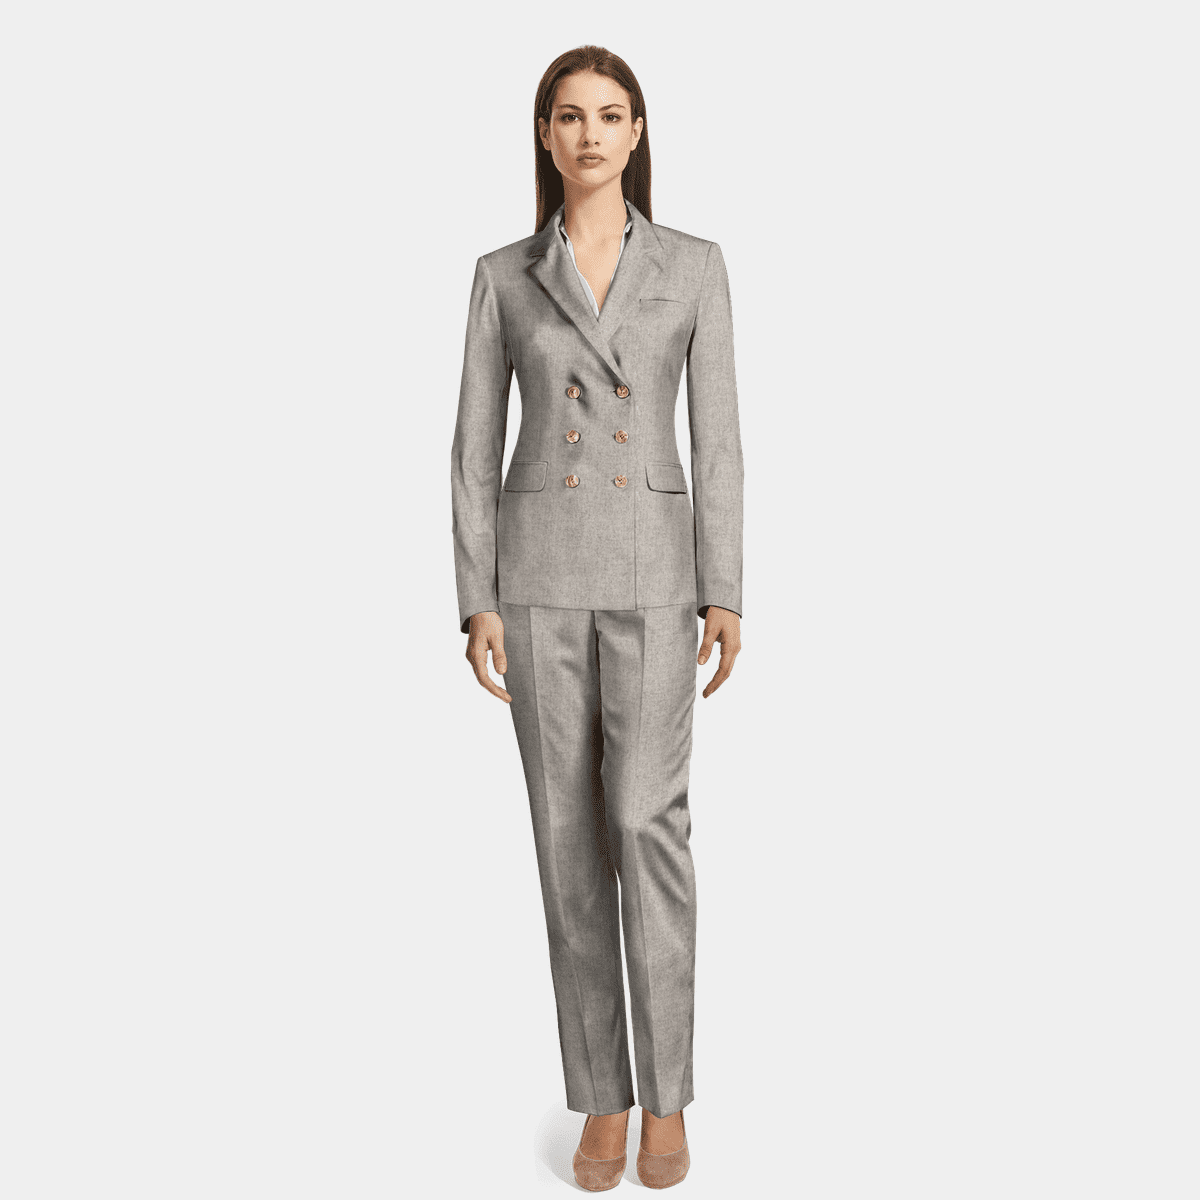 MDB 025262 ( Designer Pant Suits for Women )